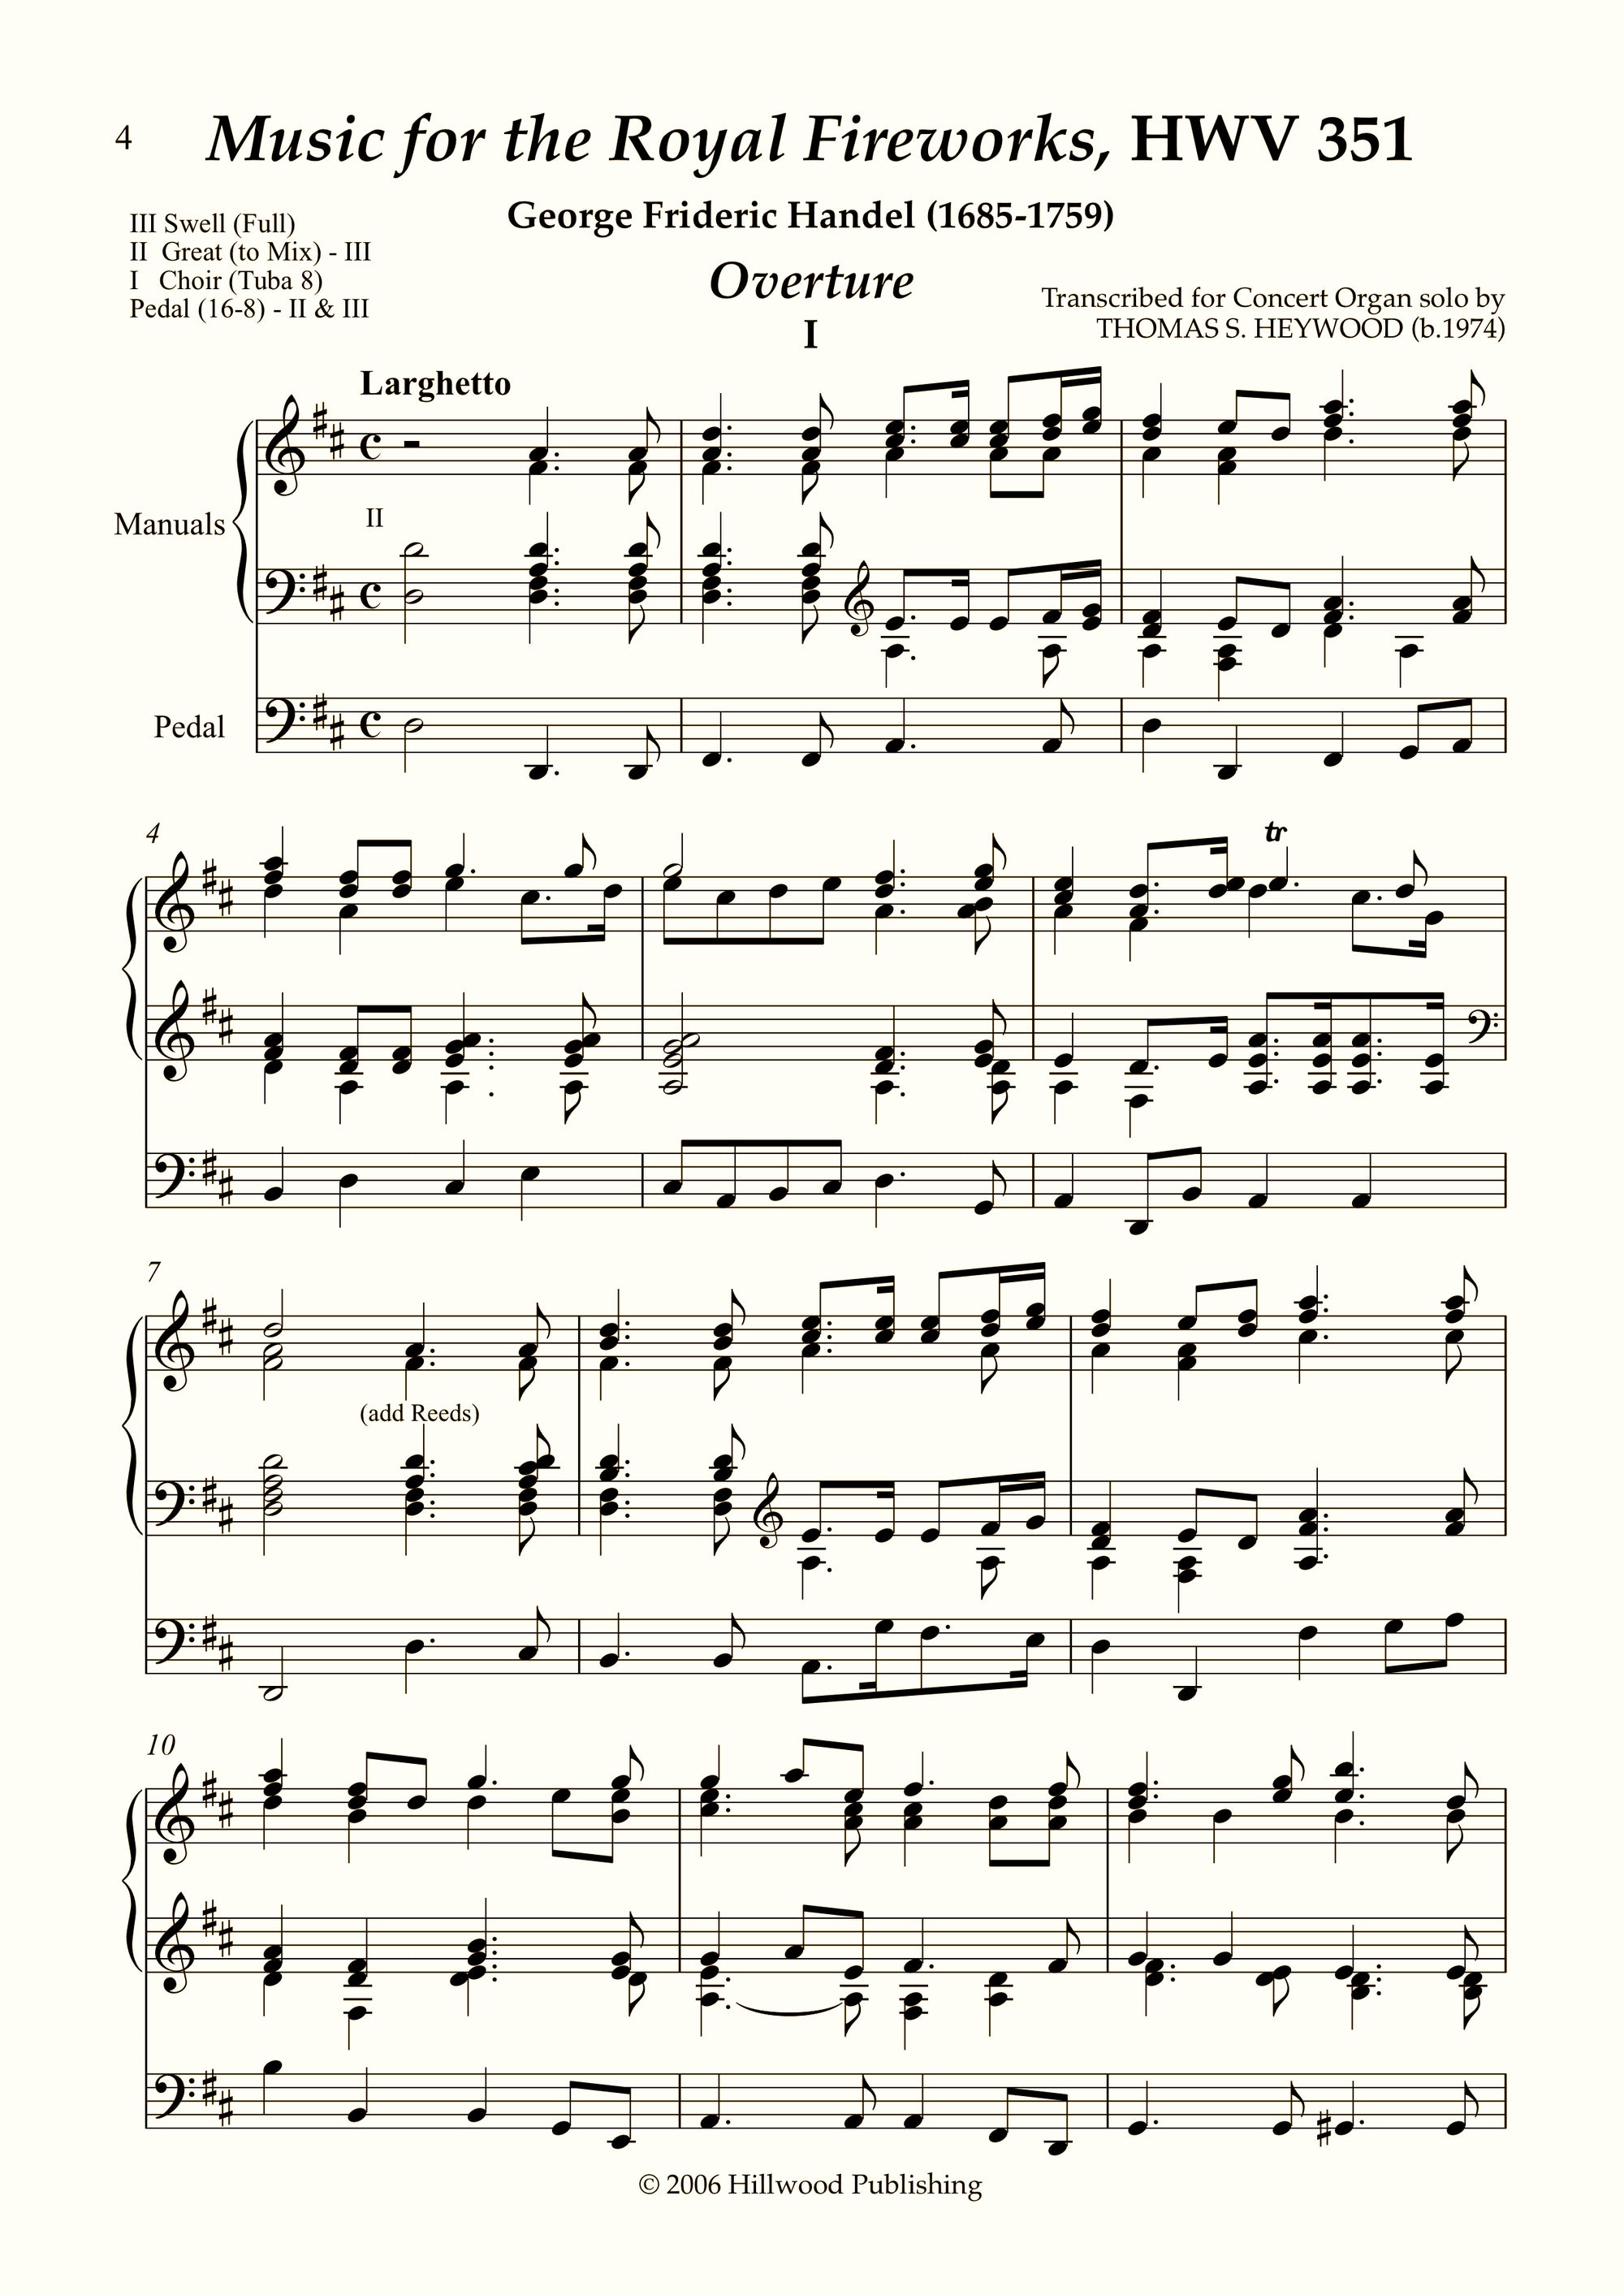 Handel/Heywood - Ouverture from Music for the Royal Fireworks, HWV 351 (Score) | Thomas Heywood | Concert Organ International